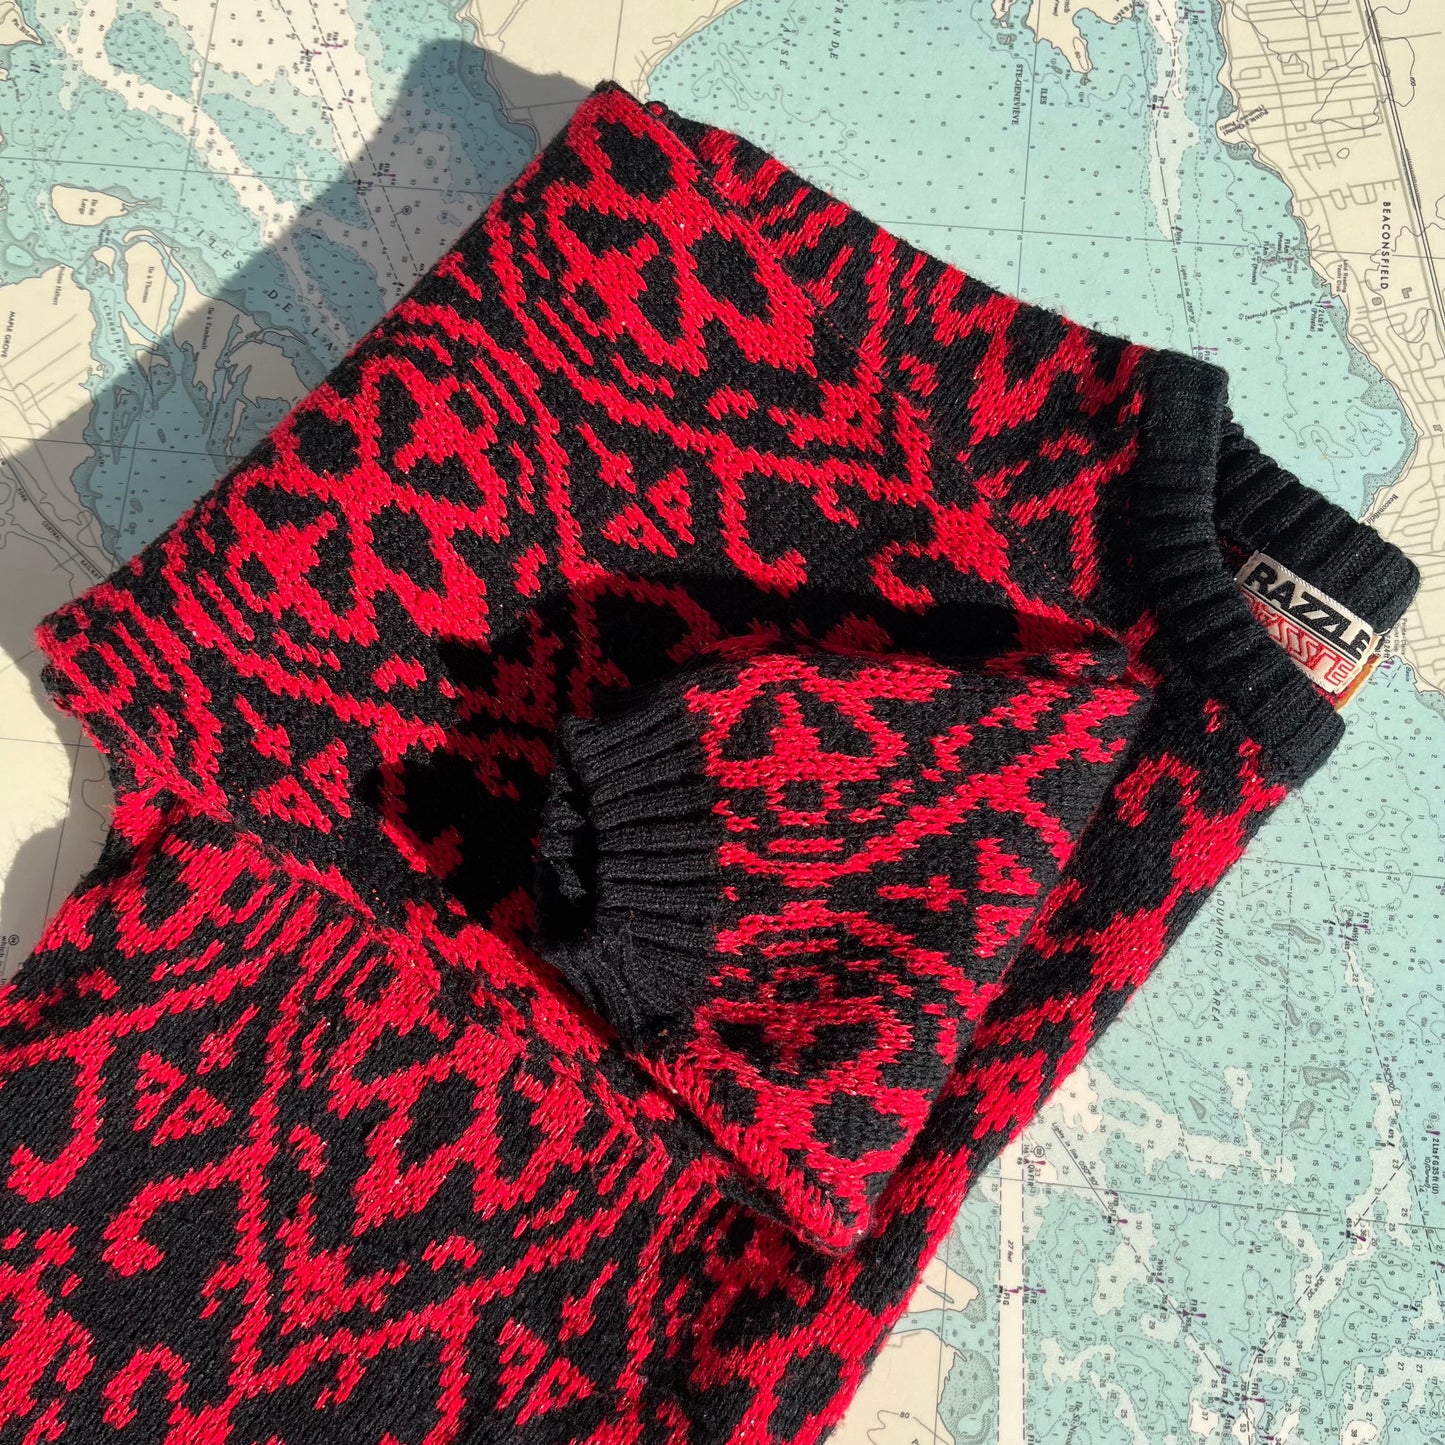 Vintage Razzle Dazzle Metallic Red and Black Geometric Knit Sweater